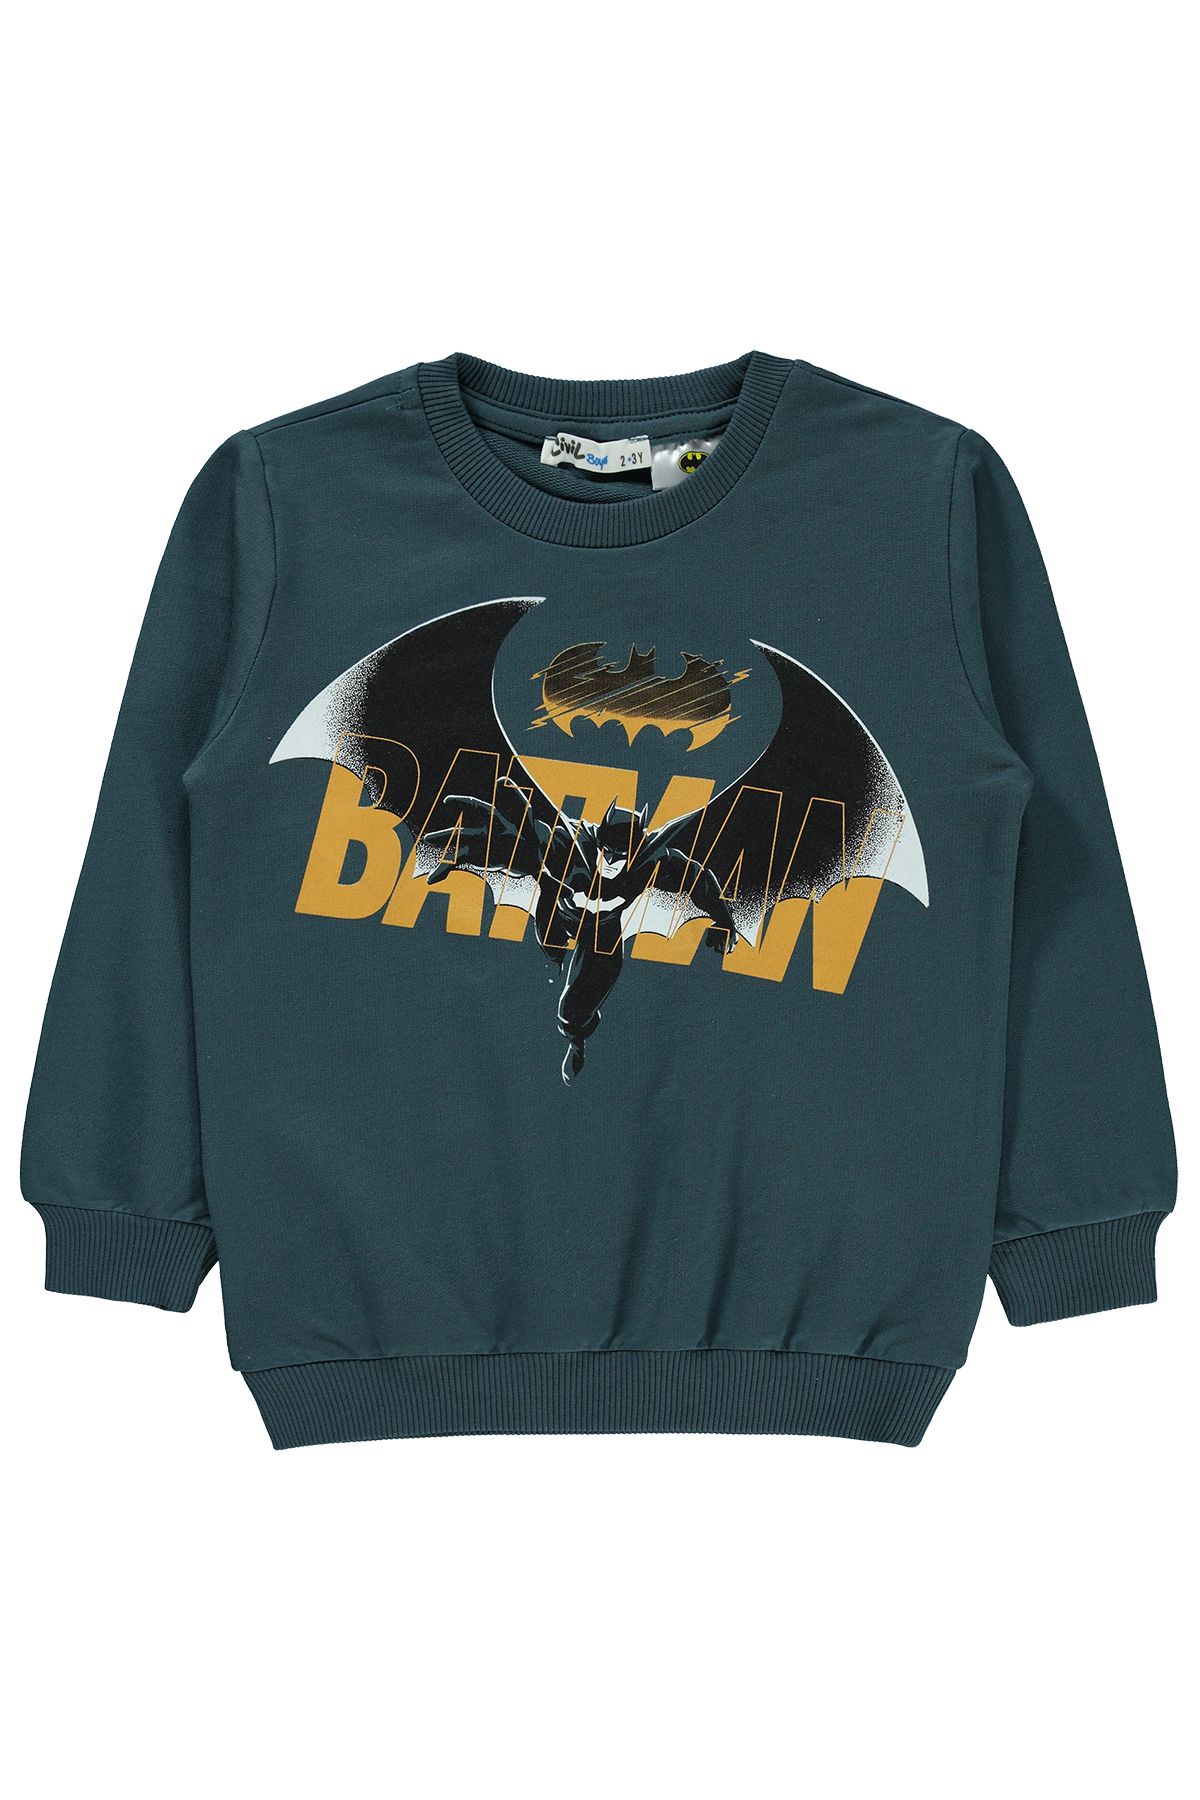 Batman Erkek Çocuk Sweatshirt 2-5 Yaş Antrasit 19B79166223W1